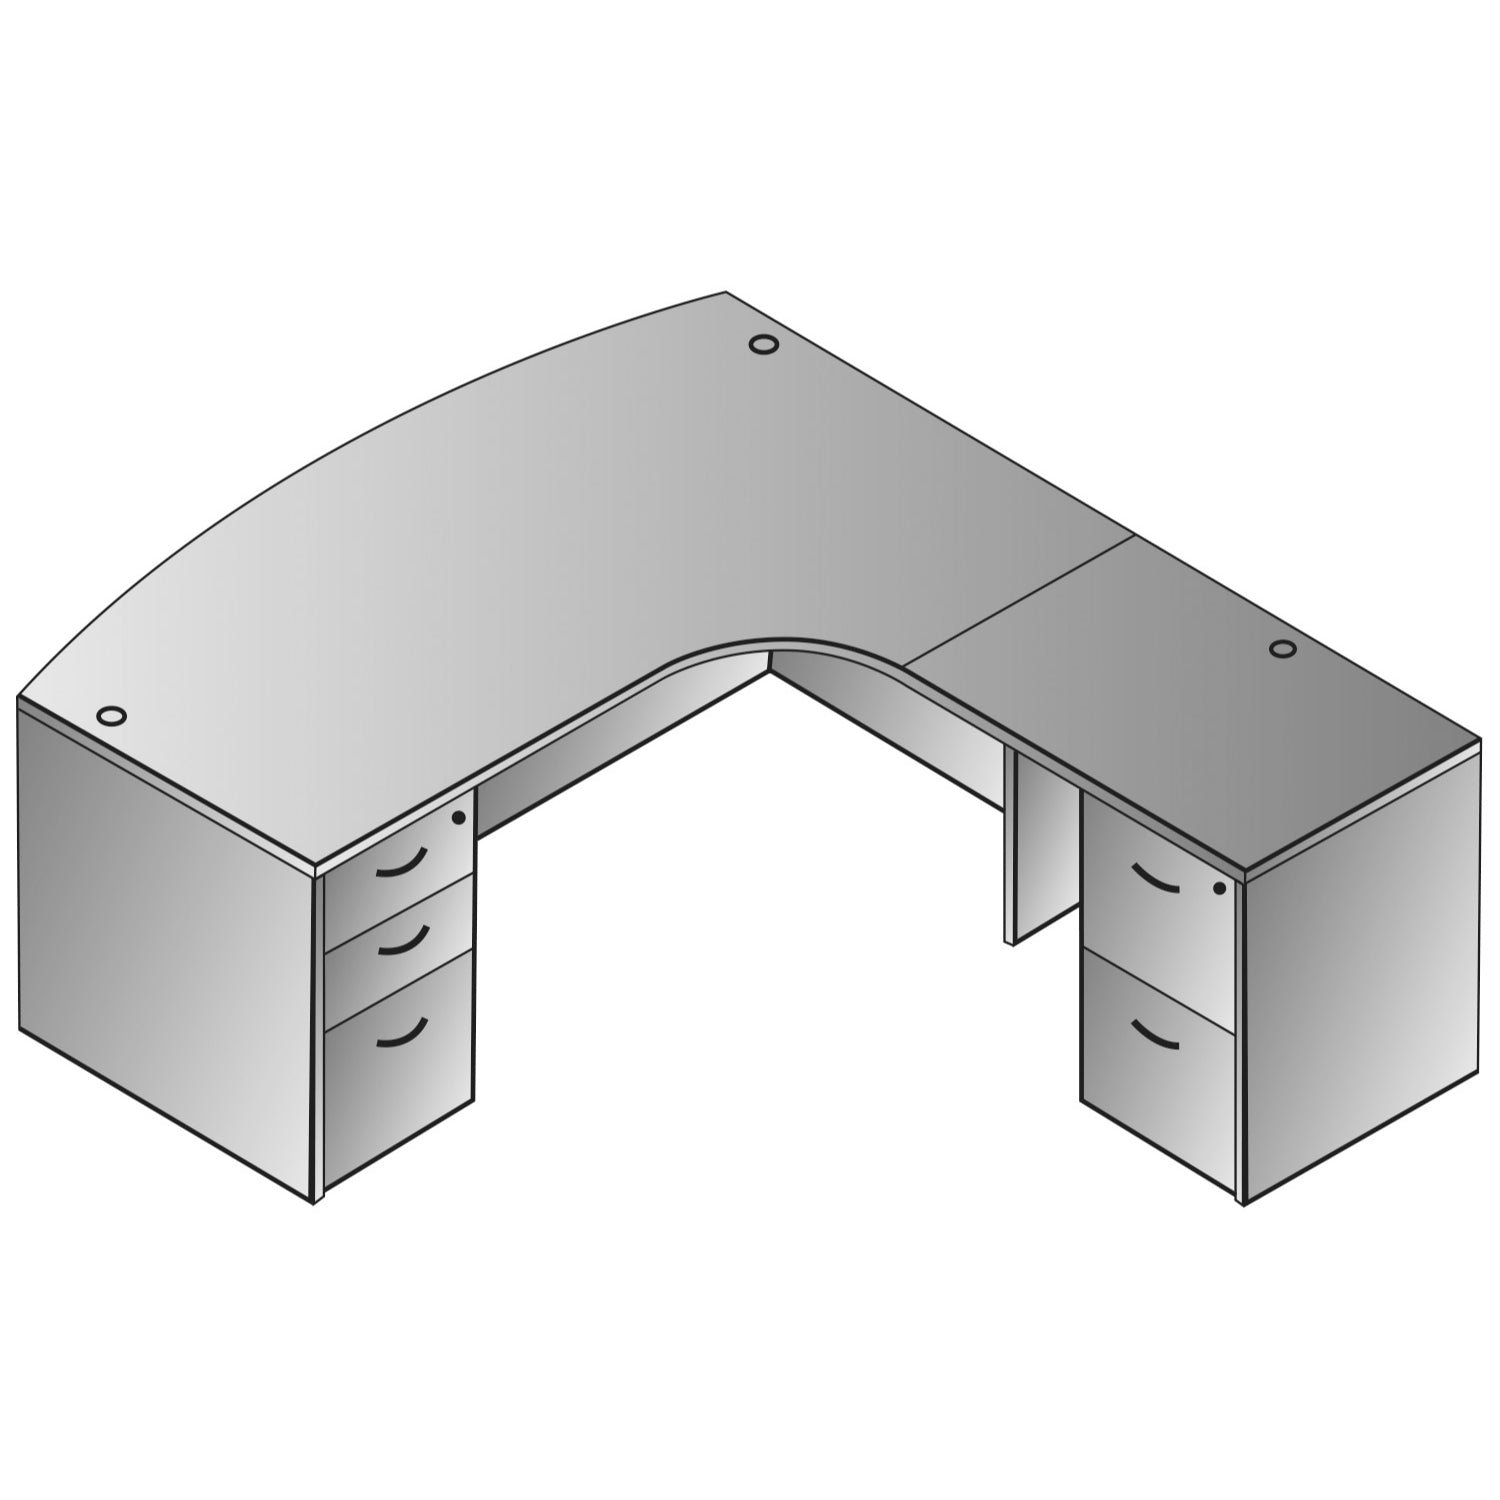 Napa Right L Shape with Curved Corner Desk, 71" x 83" x 29" H